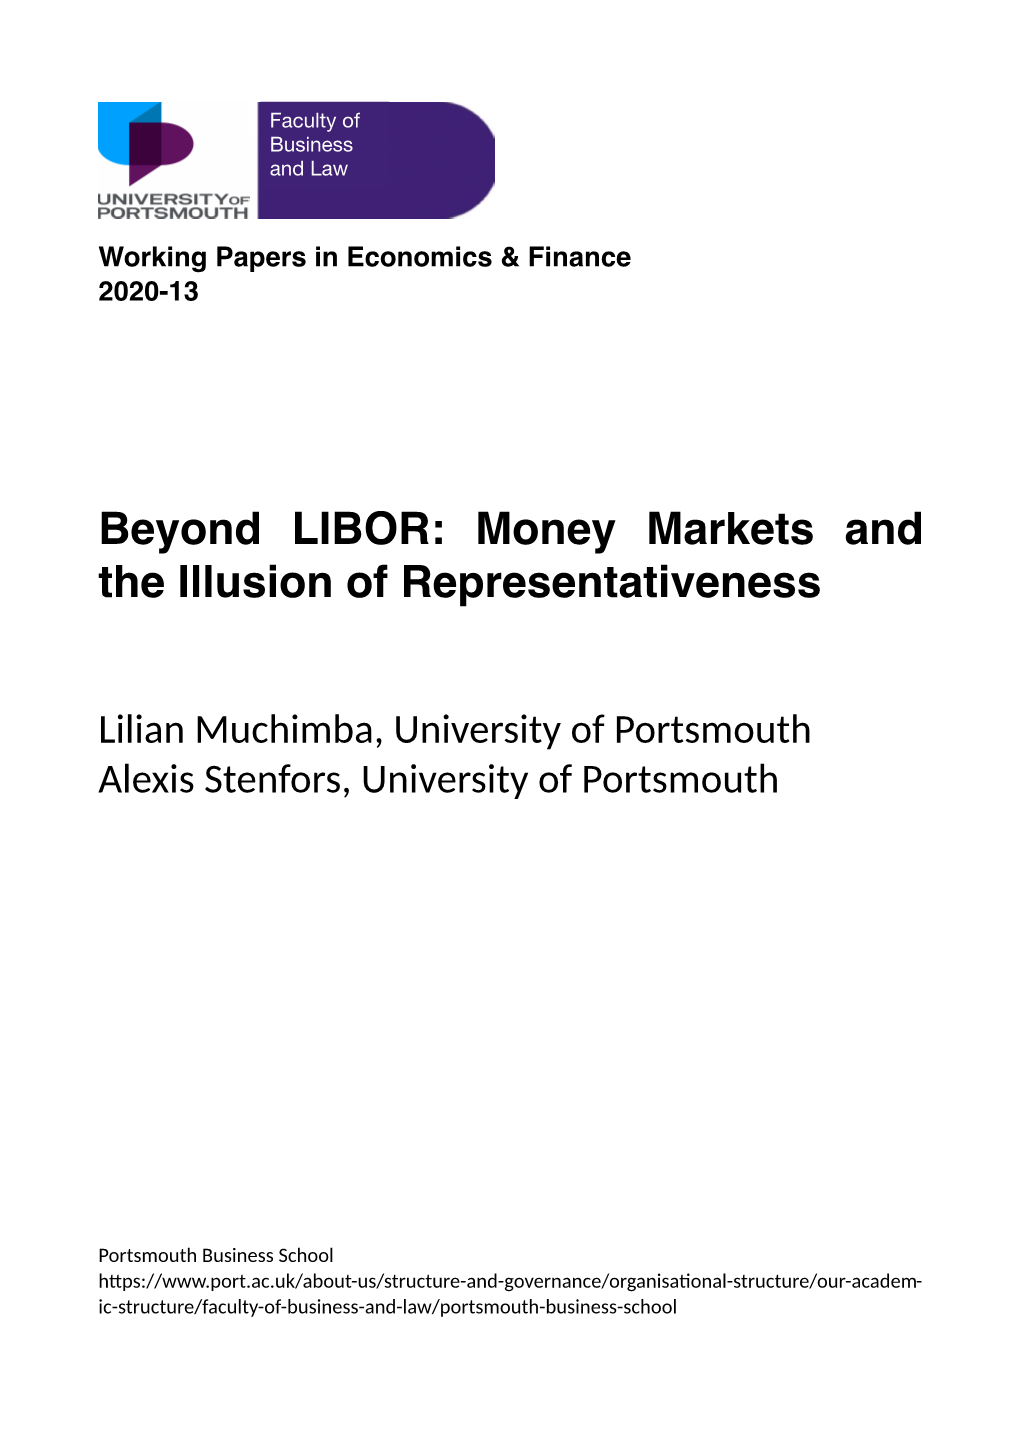 Beyond LIBOR: Money Markets and the Illusion of Representativeness